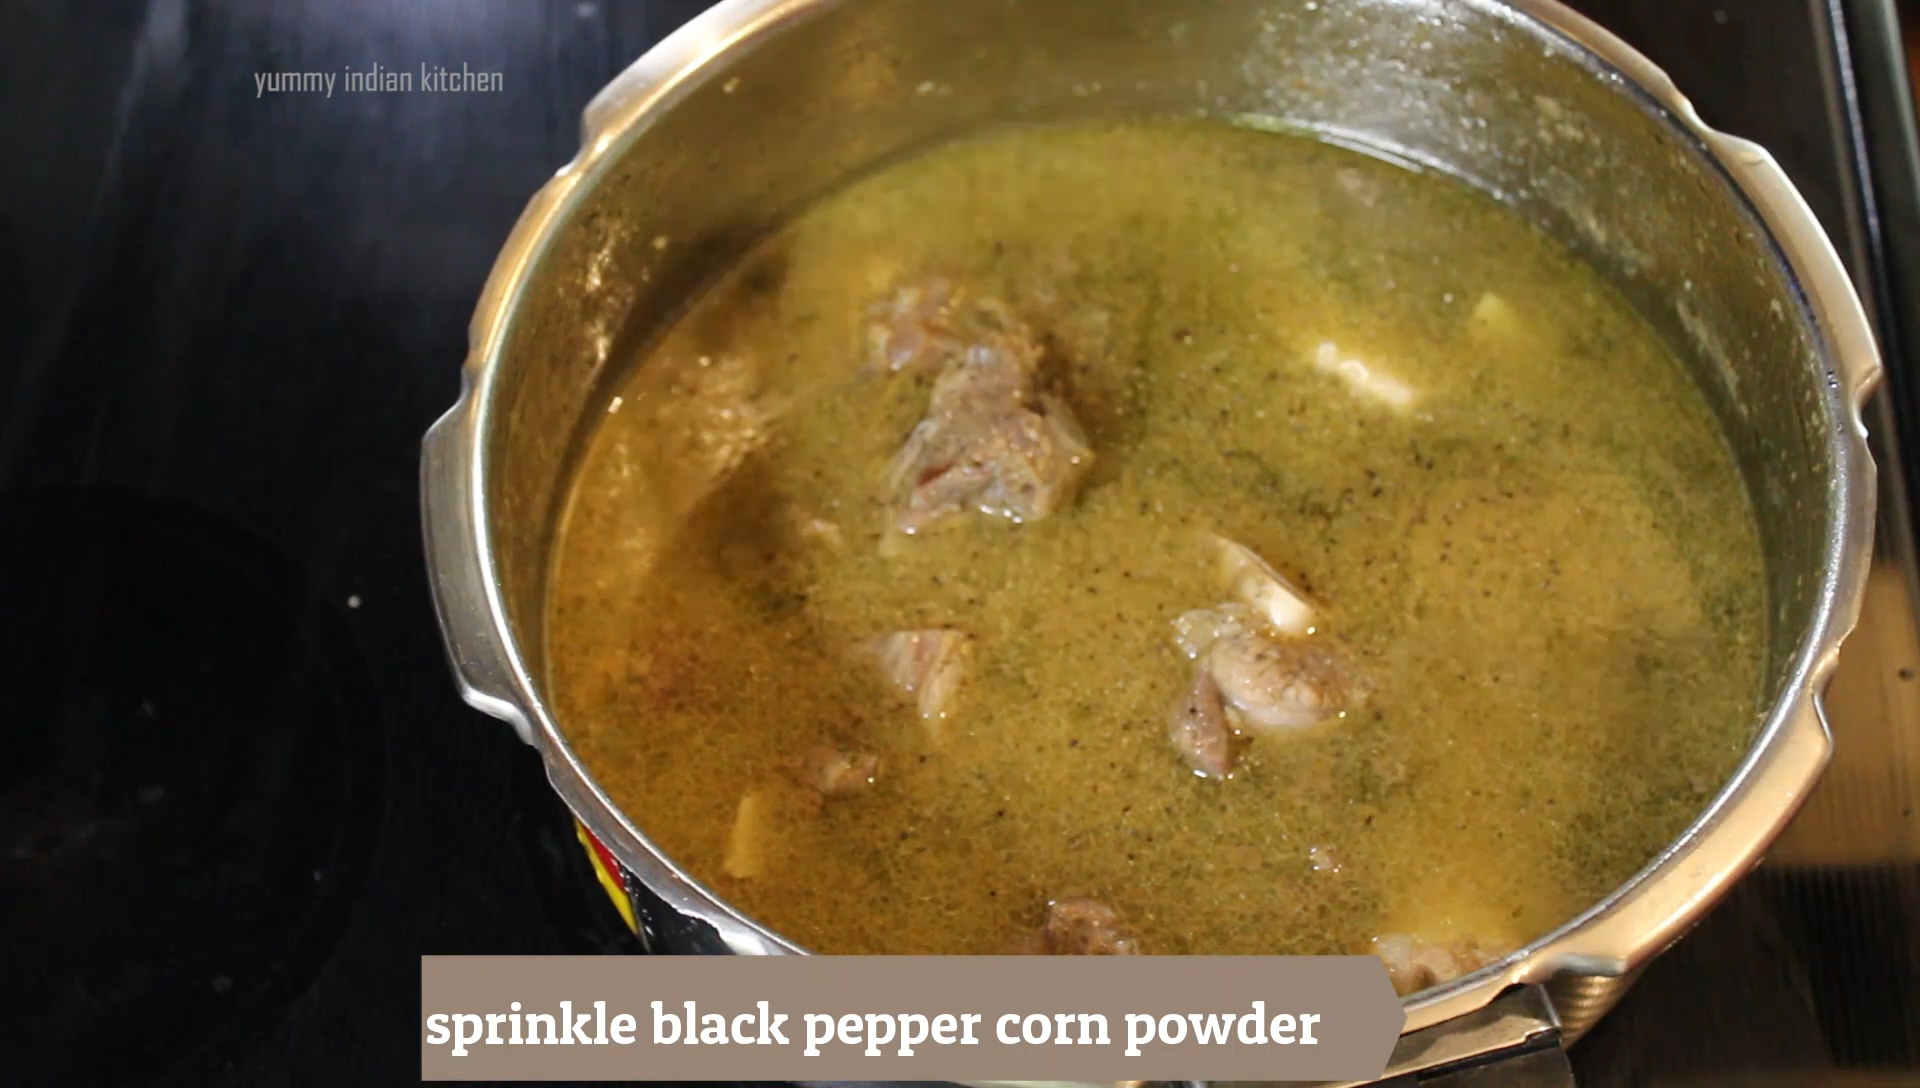 sprinkling black pepper powder 